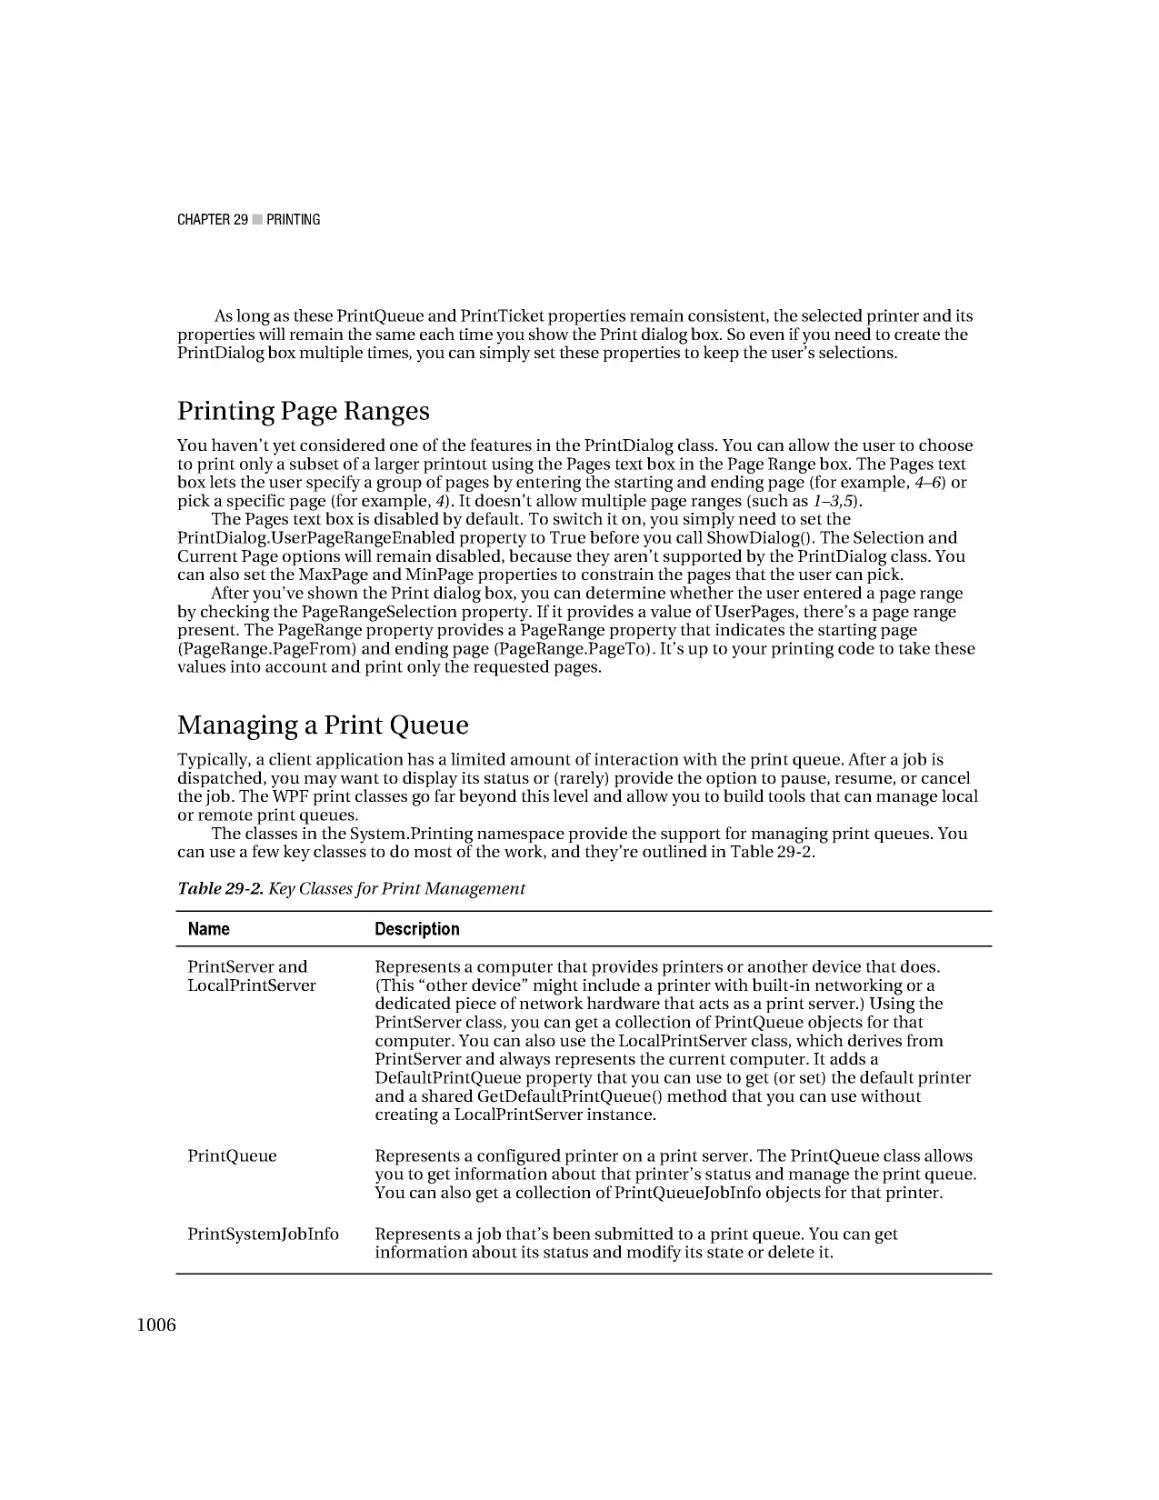 Printing Page Ranges
Managing a Print Queue